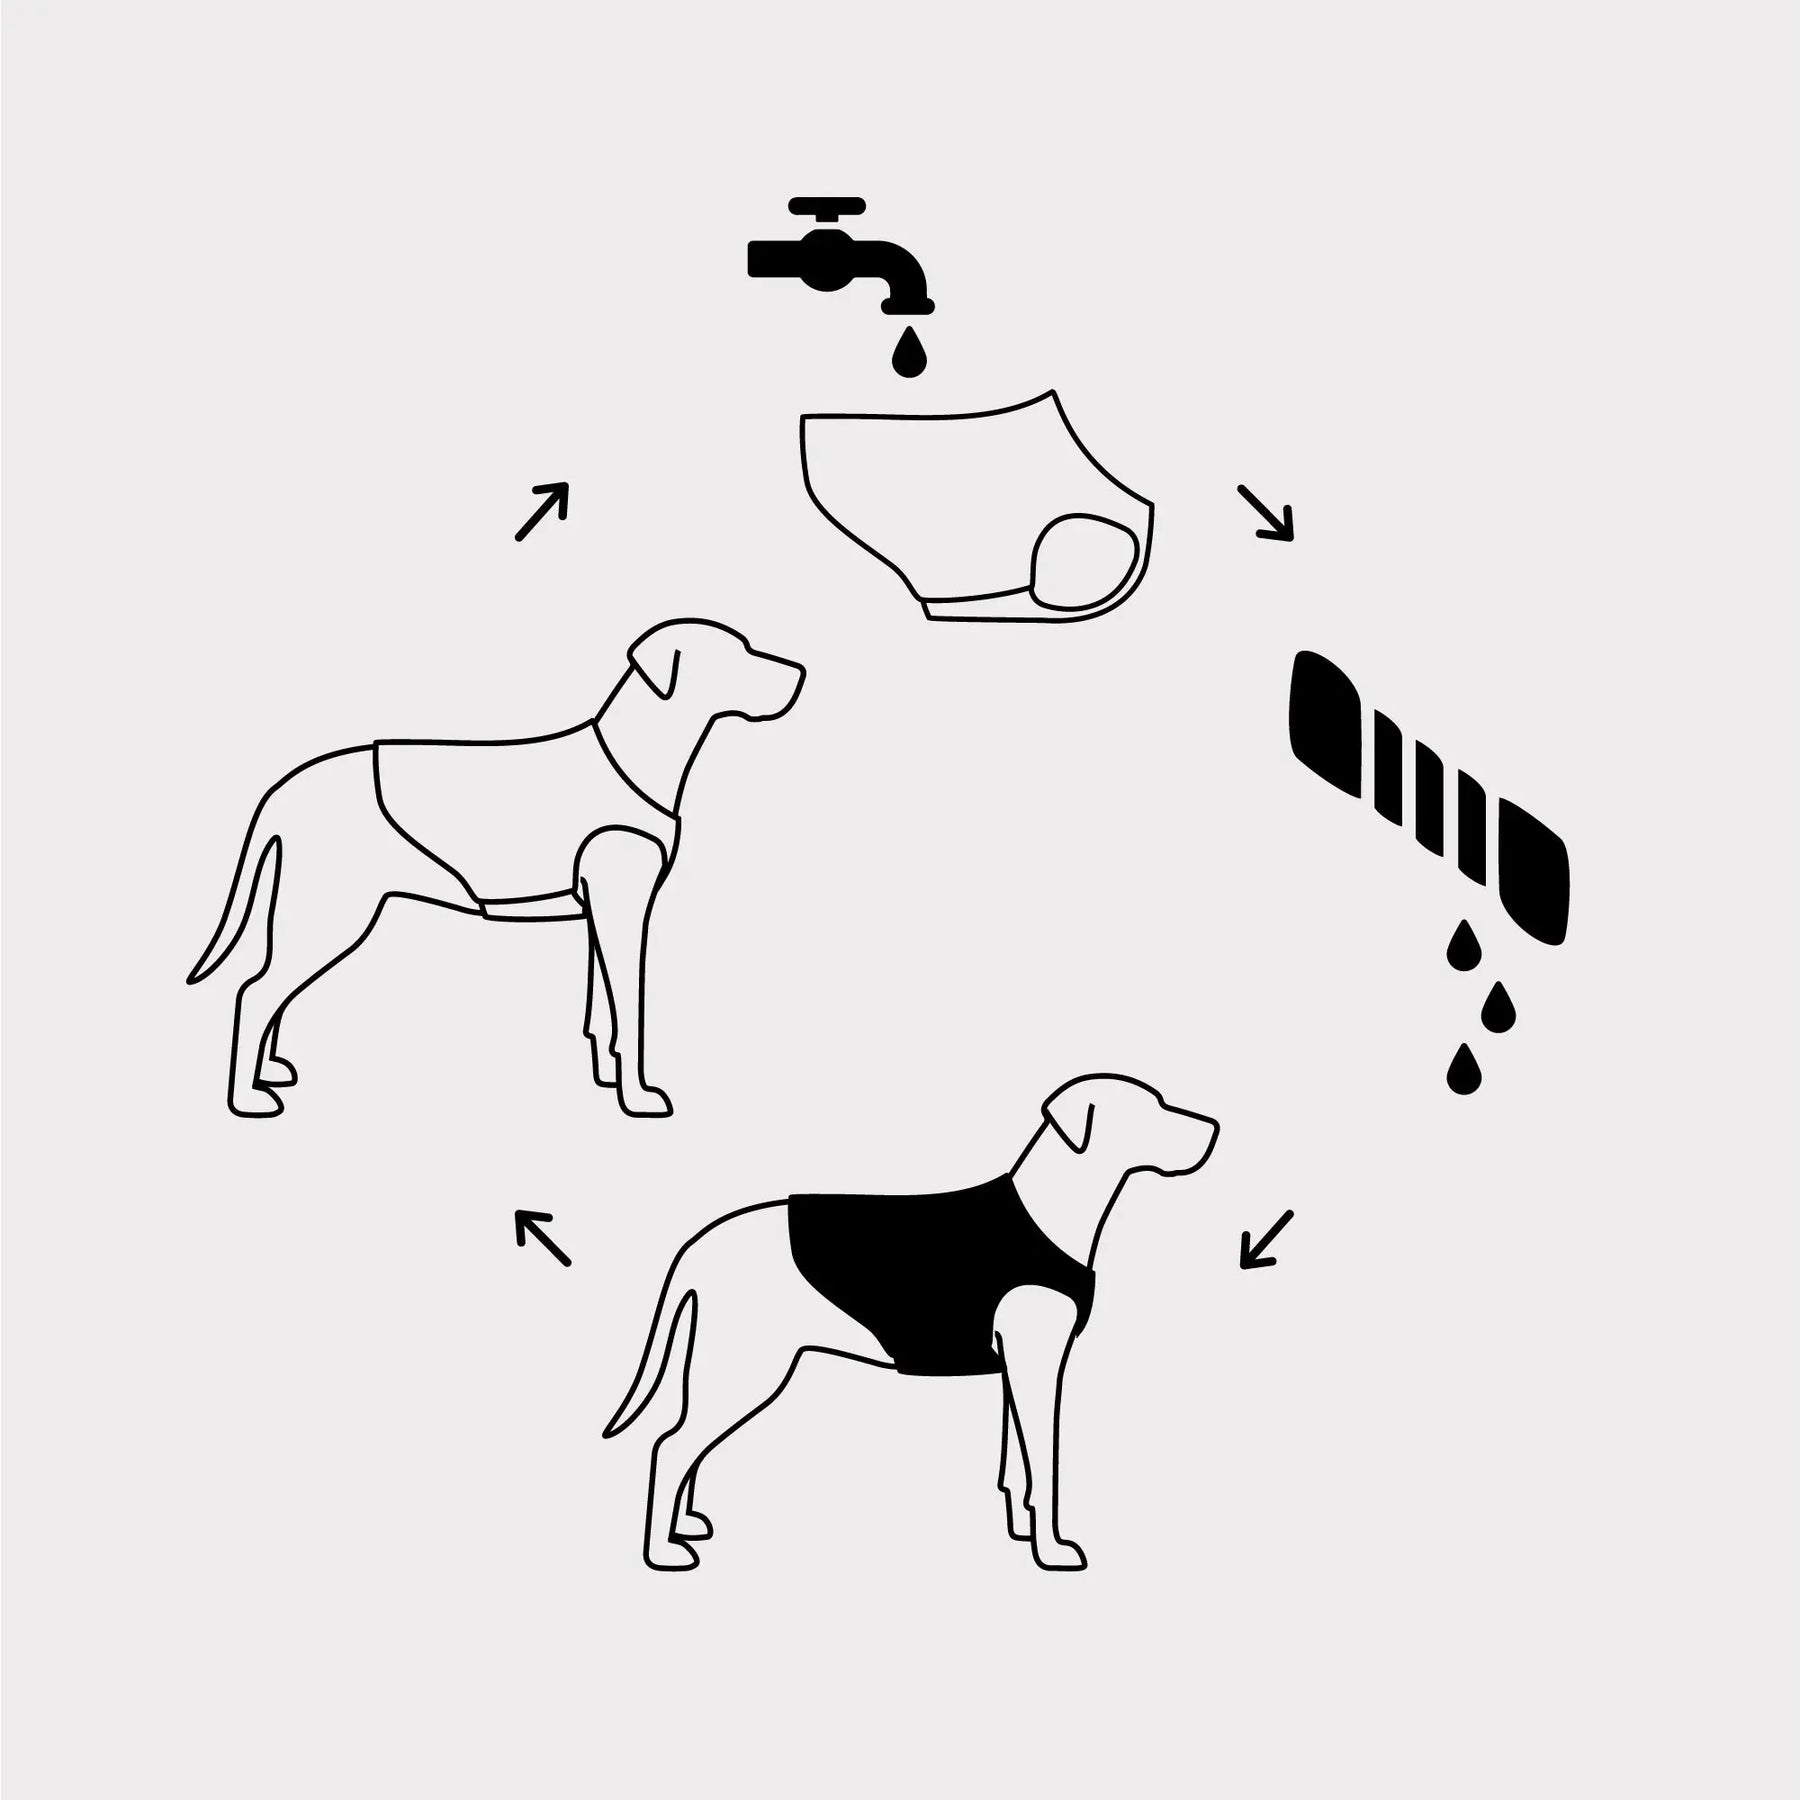 Elasto-Fit¨ Ice Vest¨ | Dog Cooling Vest GF PET Cooling GF Pet Official Online Store